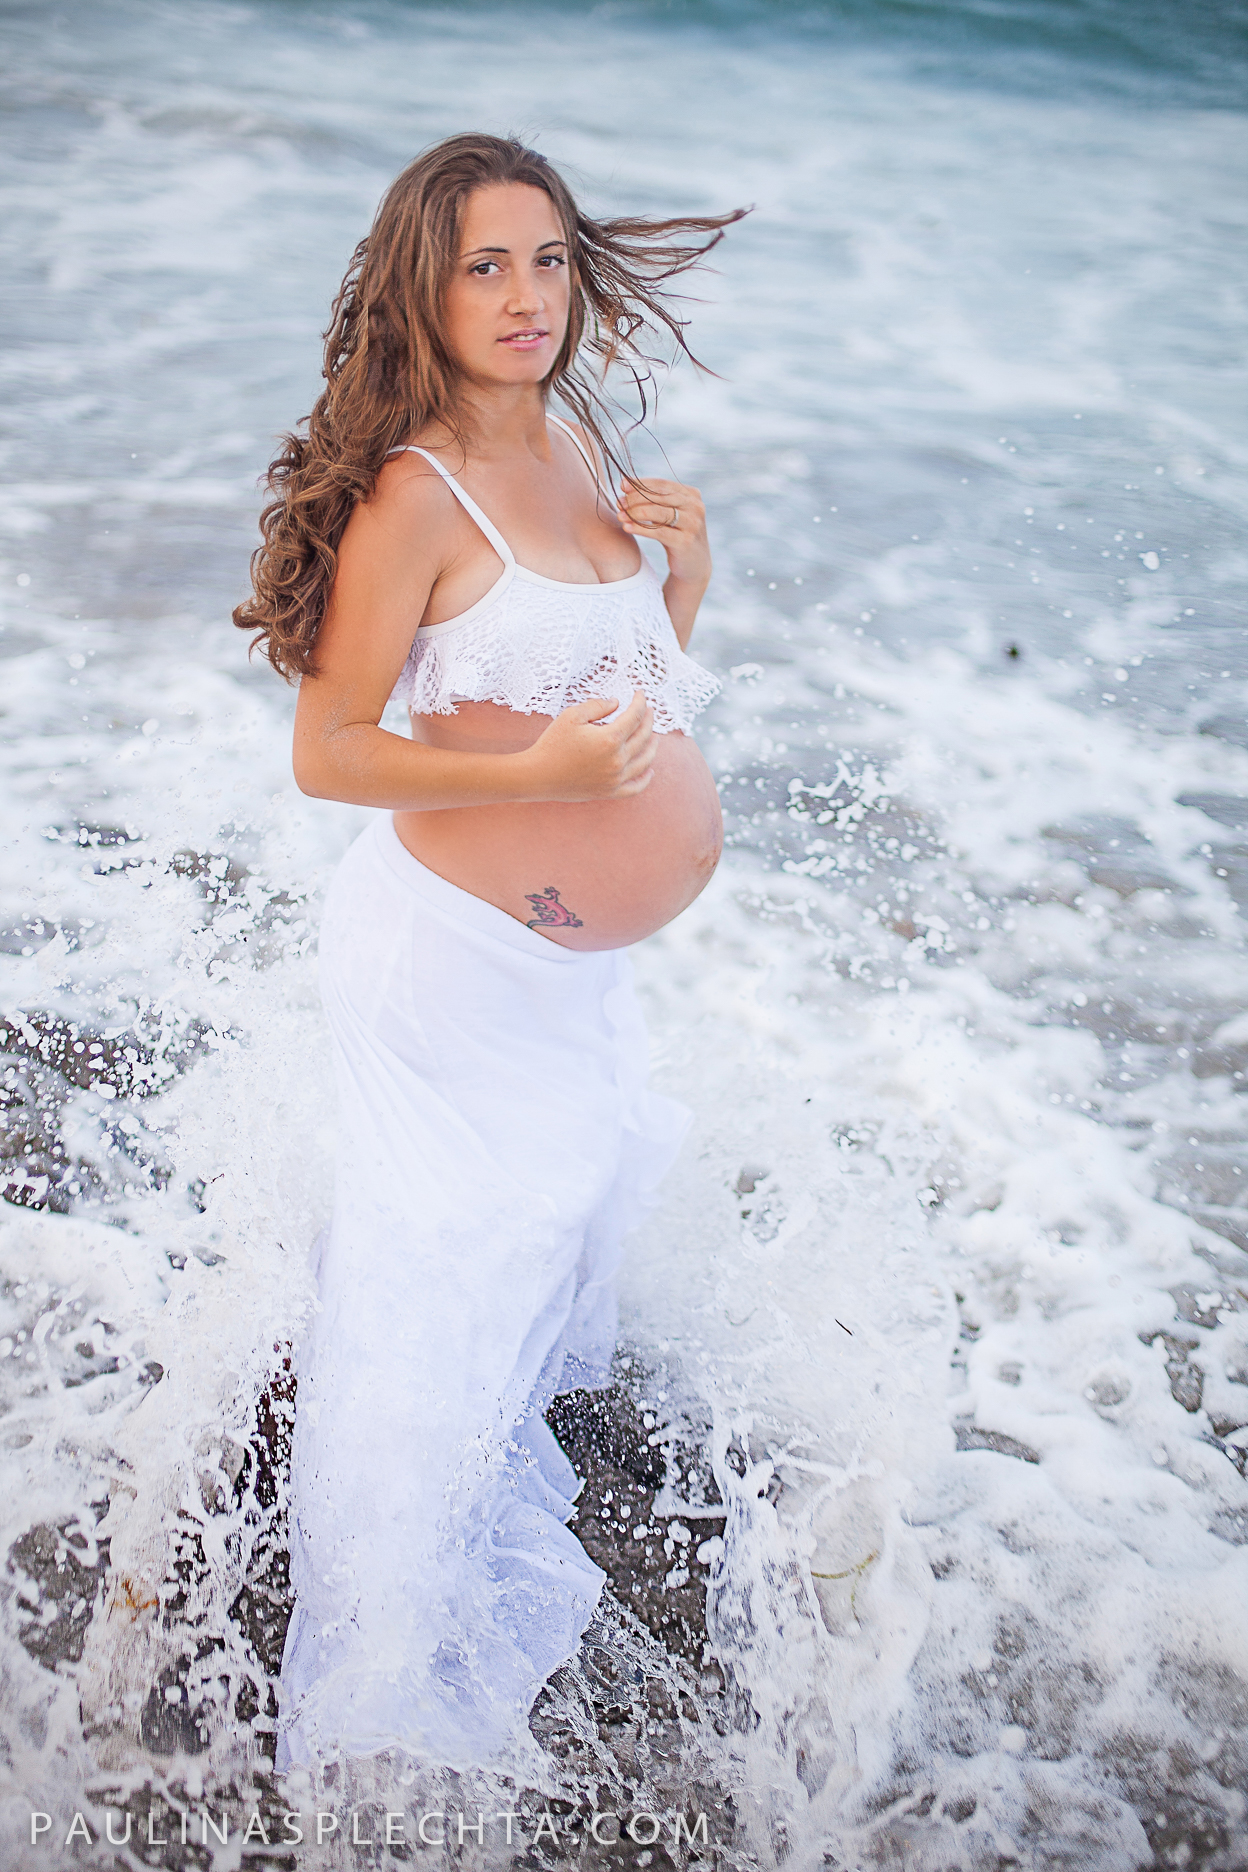 boca-raton-maternity-photographer-pregnancy-photos-shoot-ft-lauderdale-south-florida-gown-dress-newborn-west-palm-beach-delray-23.jpg